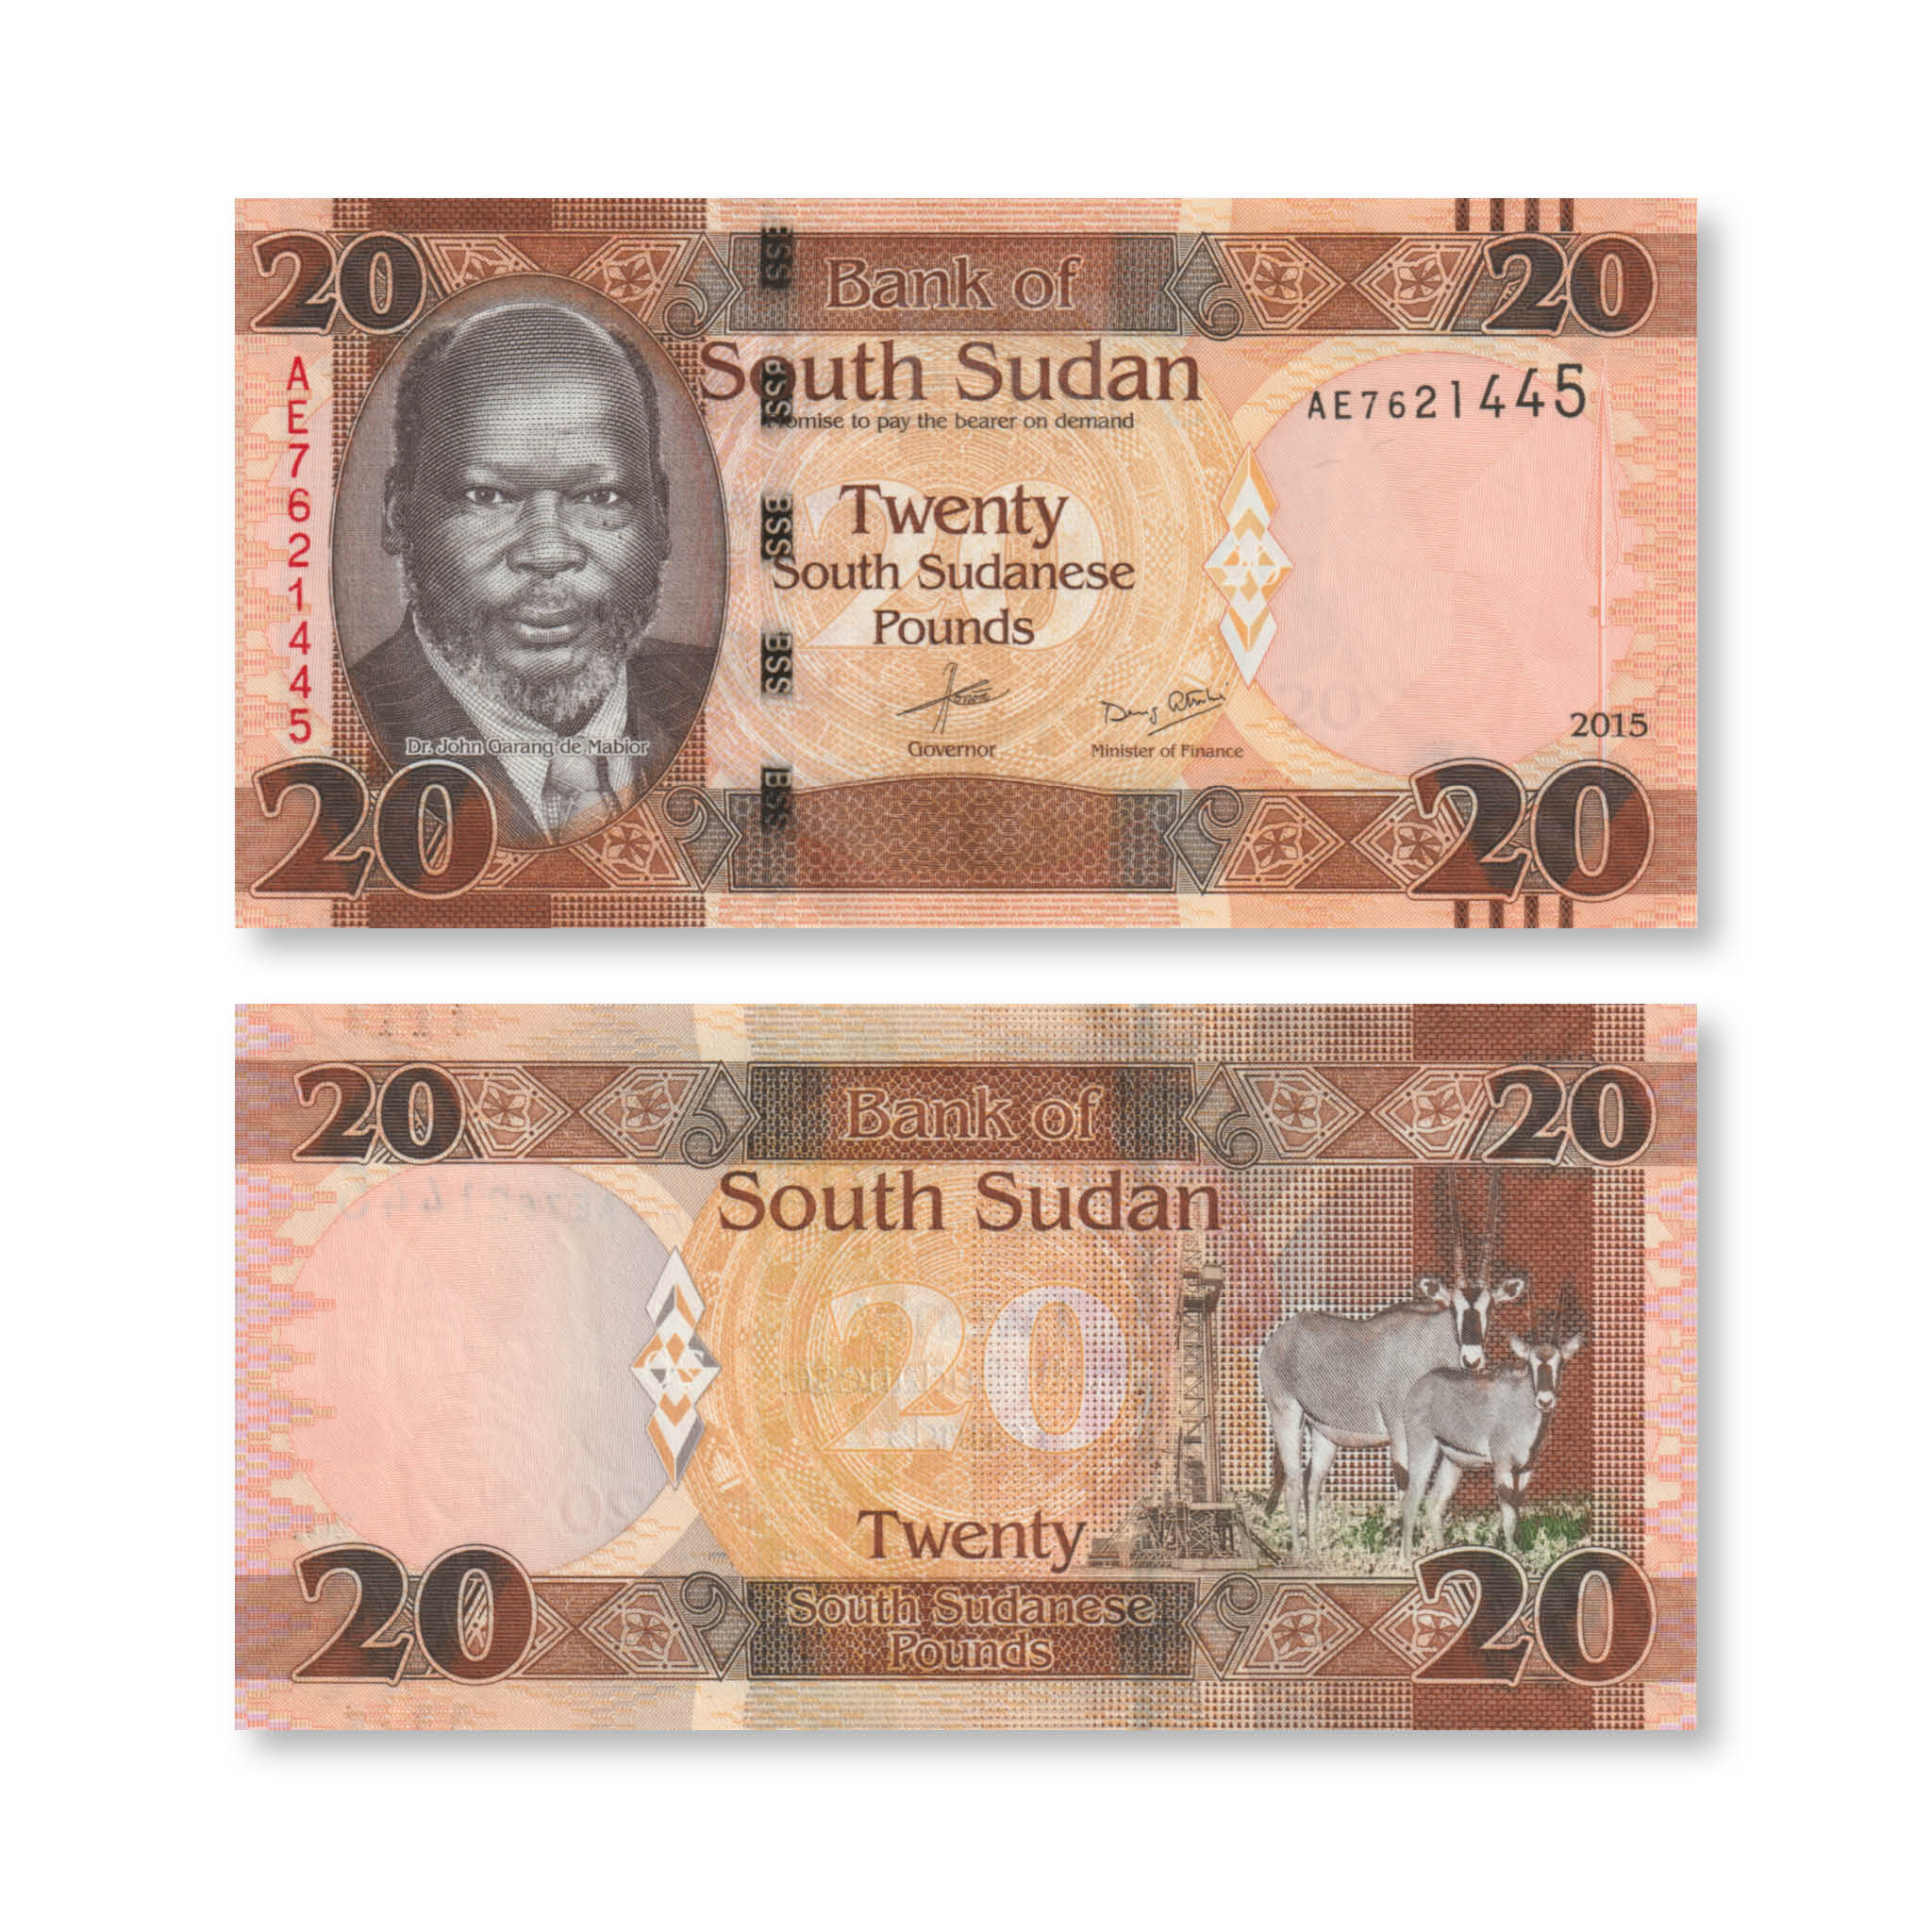 South Sudan 20 Pounds, 2015, B113a, P13a, UNC